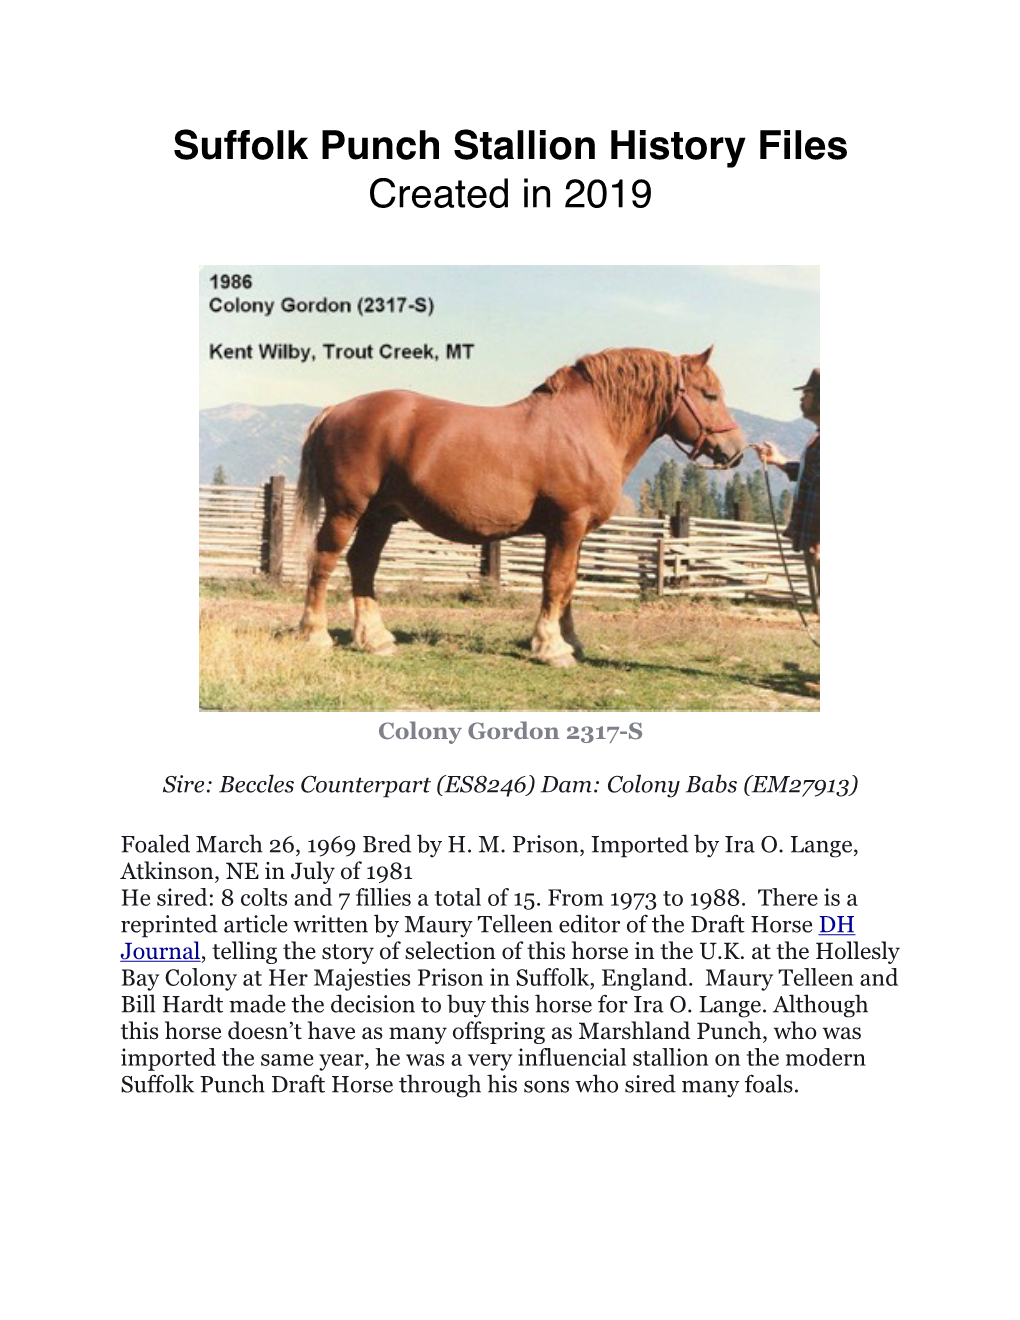 Stallion History File Word